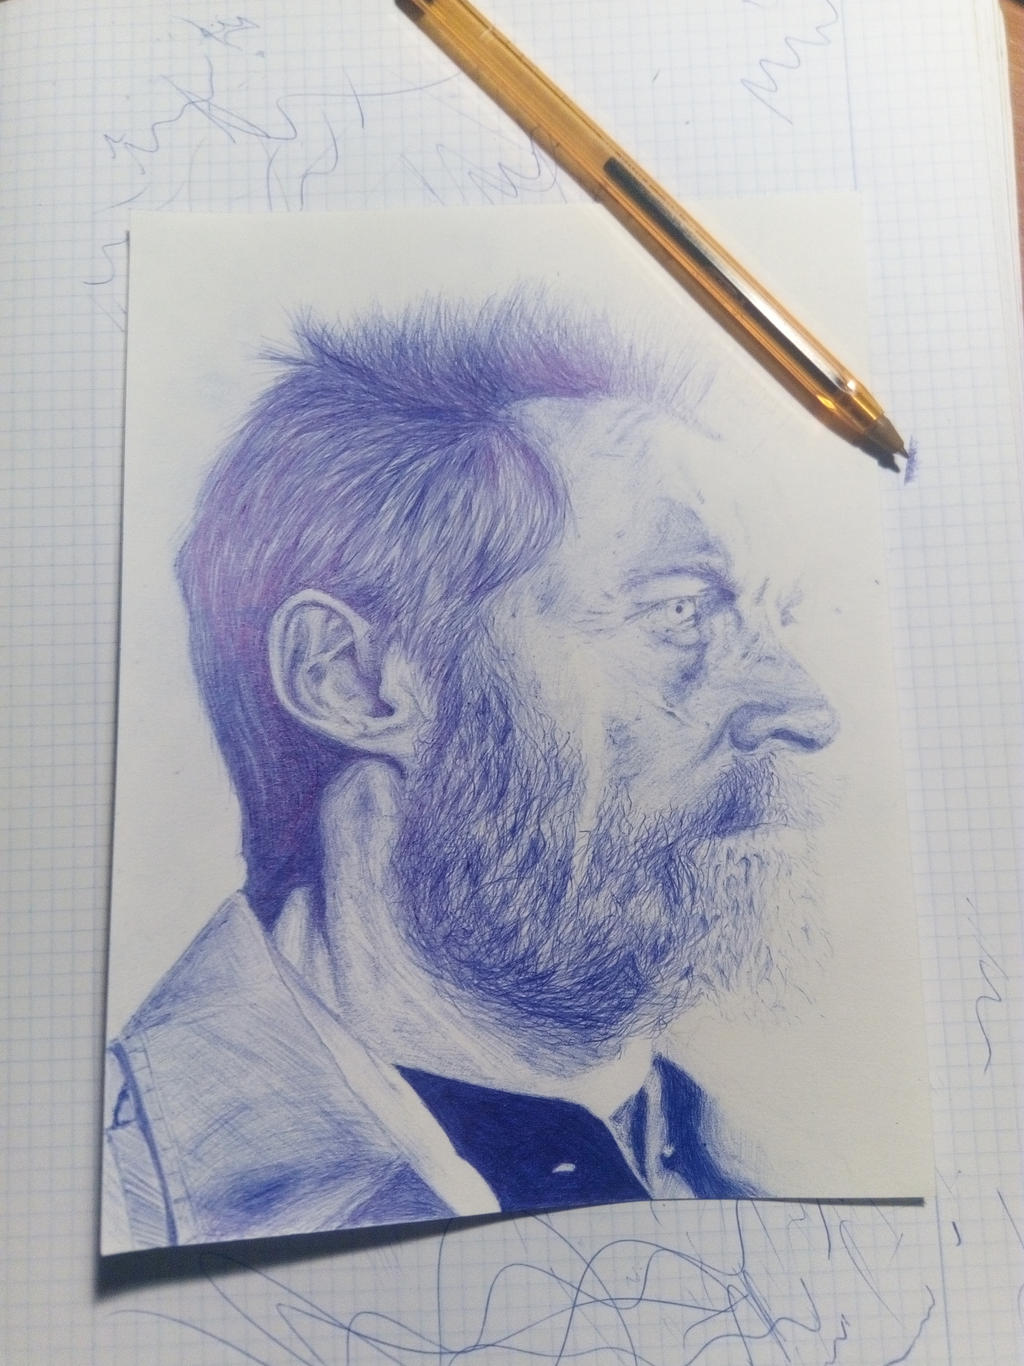 Hugh Jackman pen portrait - Logan